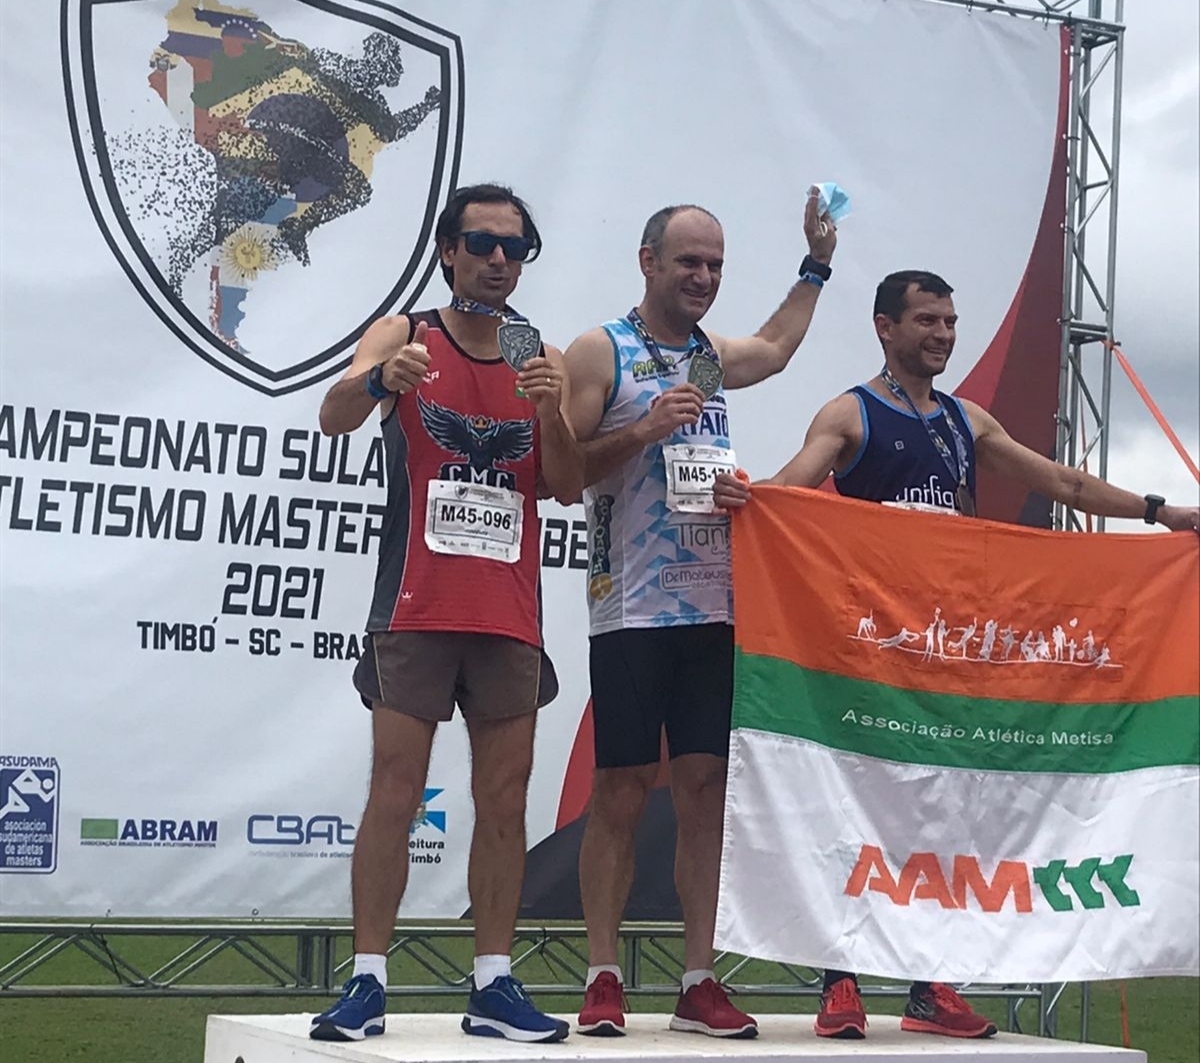 Taioense conquista medalha de ouro no Campeonato Sulamericano de Atletismo Master de Clubes